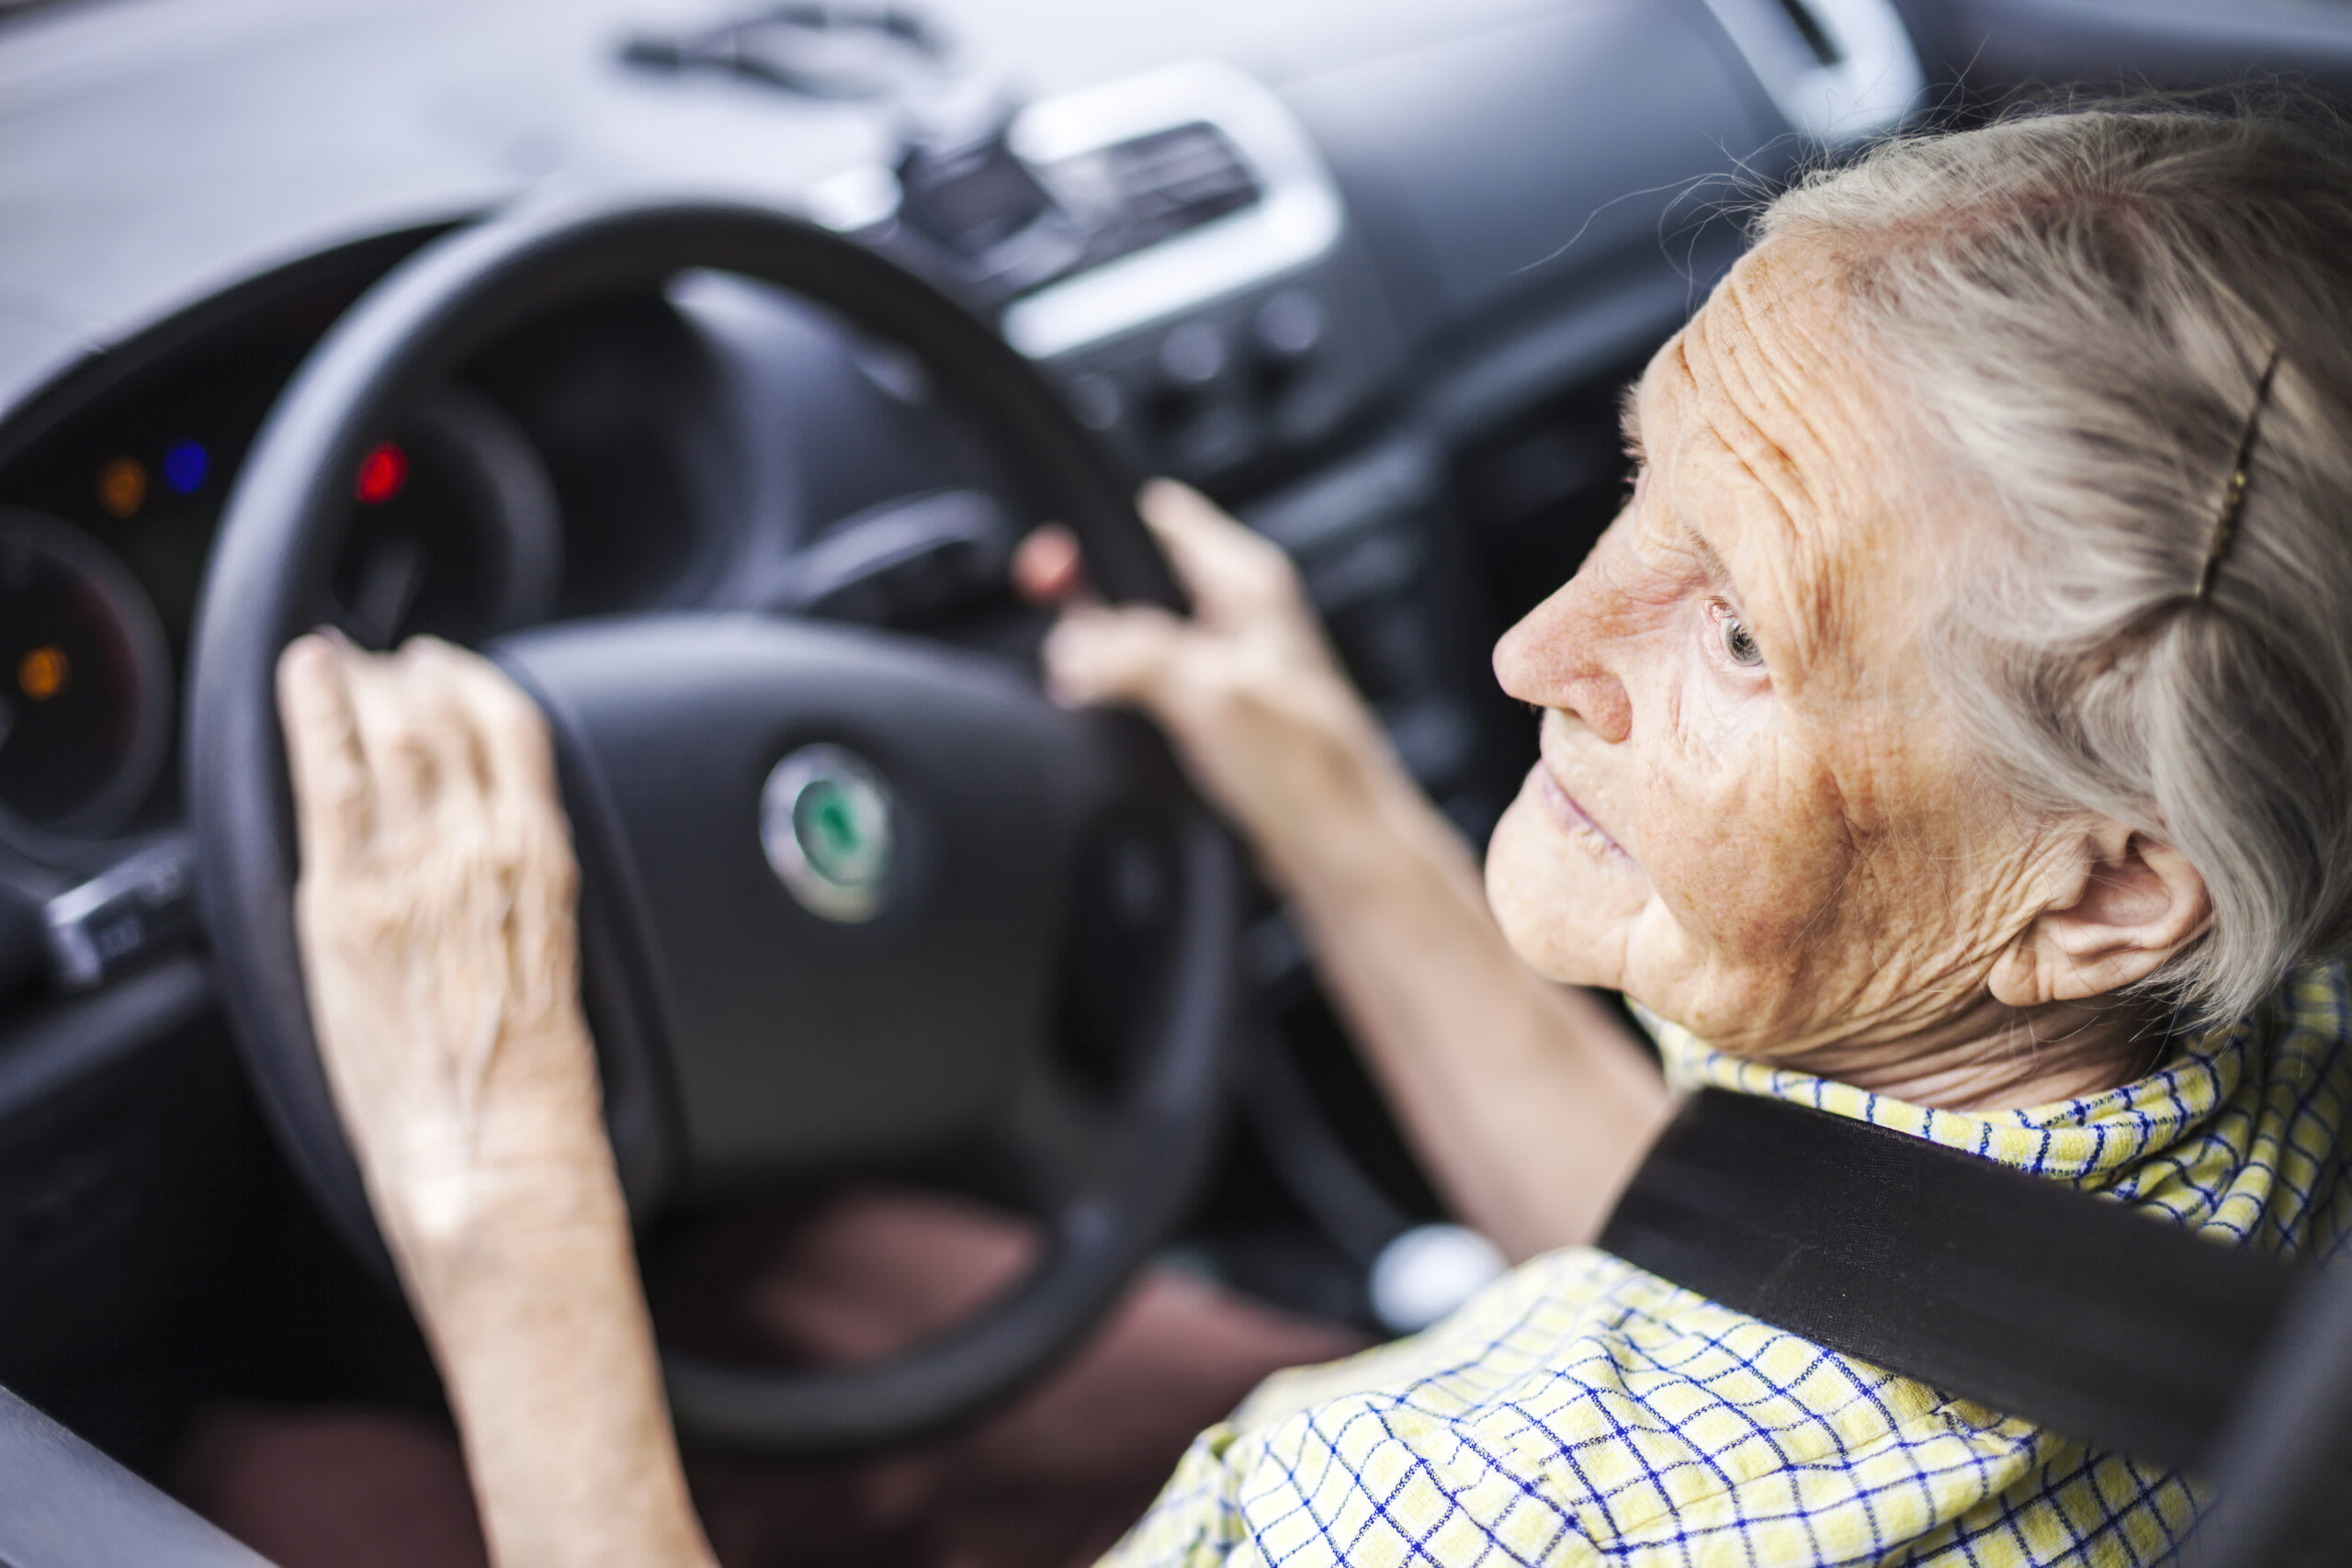 Elderly Drivers: When to Take the Car Keys